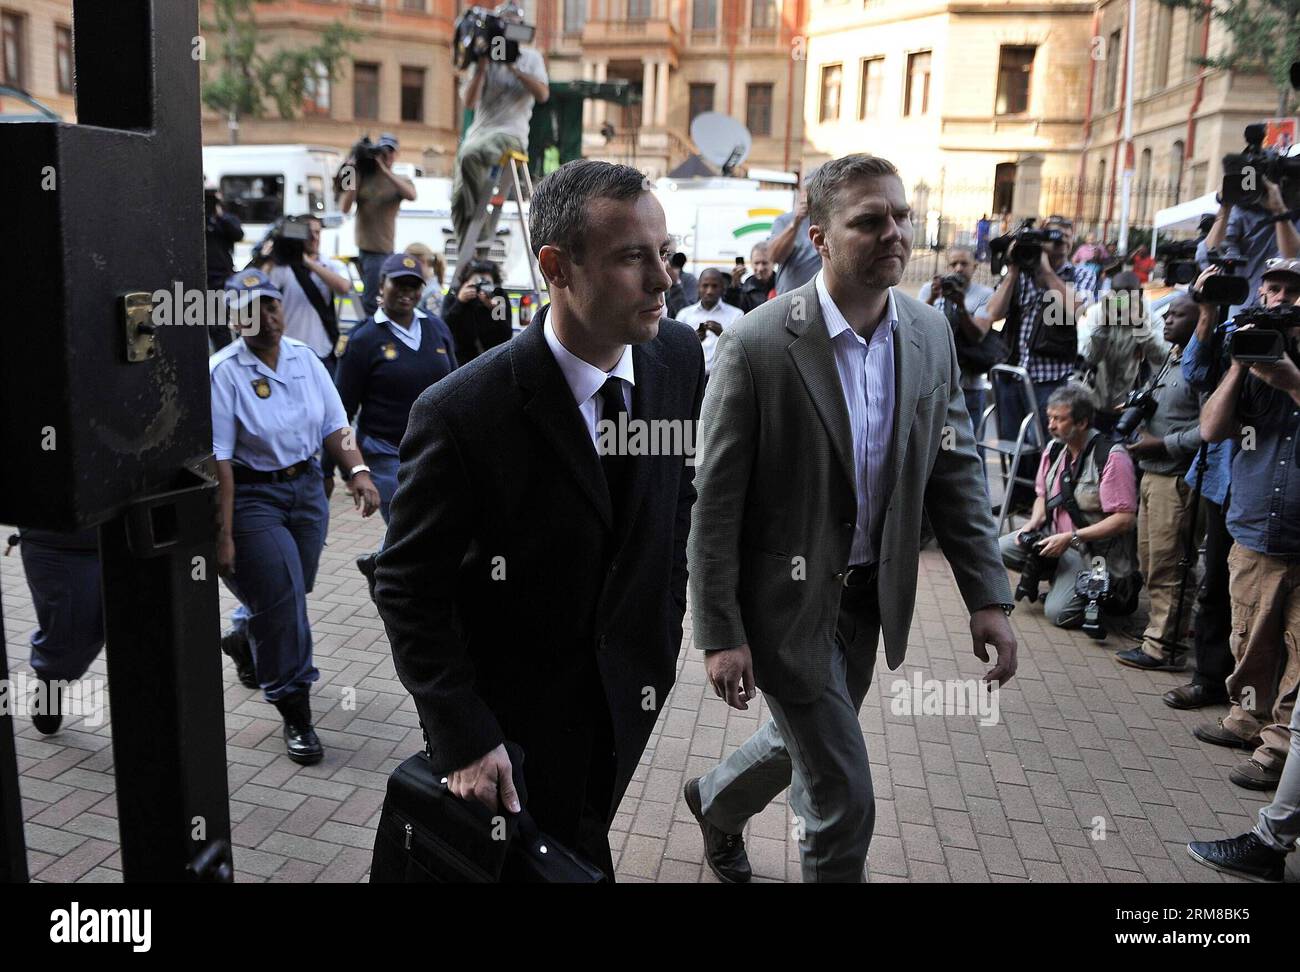 (140407) -- PRETORIA, 7 avril 2014 (Xinhua) -- l'athlète paralympique sud-africain Oscar Pistorius (à gauche), accusé du meurtre de sa petite amie Reeva Steenkamp, se rend à la haute Cour du Gauteng Nord de Pretoria à Pretoria, en Afrique du Sud, le 7 avril 2014. (Xinhua/Philly) (SP) SOUTH AFRICA-PRETORIA-PISTORIUS-MURDER TRIAL PUBLICATIONxNOTxINxCHN Pretoria avril 7 2014 XINHUA South African Paralympics Athlete Oscar Pistorius l accusé du meurtre de sa petite amie Reeva se rend à Pretoria S North Gauteng High court à Pretoria Afrique du Sud LE 7 2014 avril XINHUA Philly SP Afrique du Sud Pretoria Pistorius Murd Banque D'Images